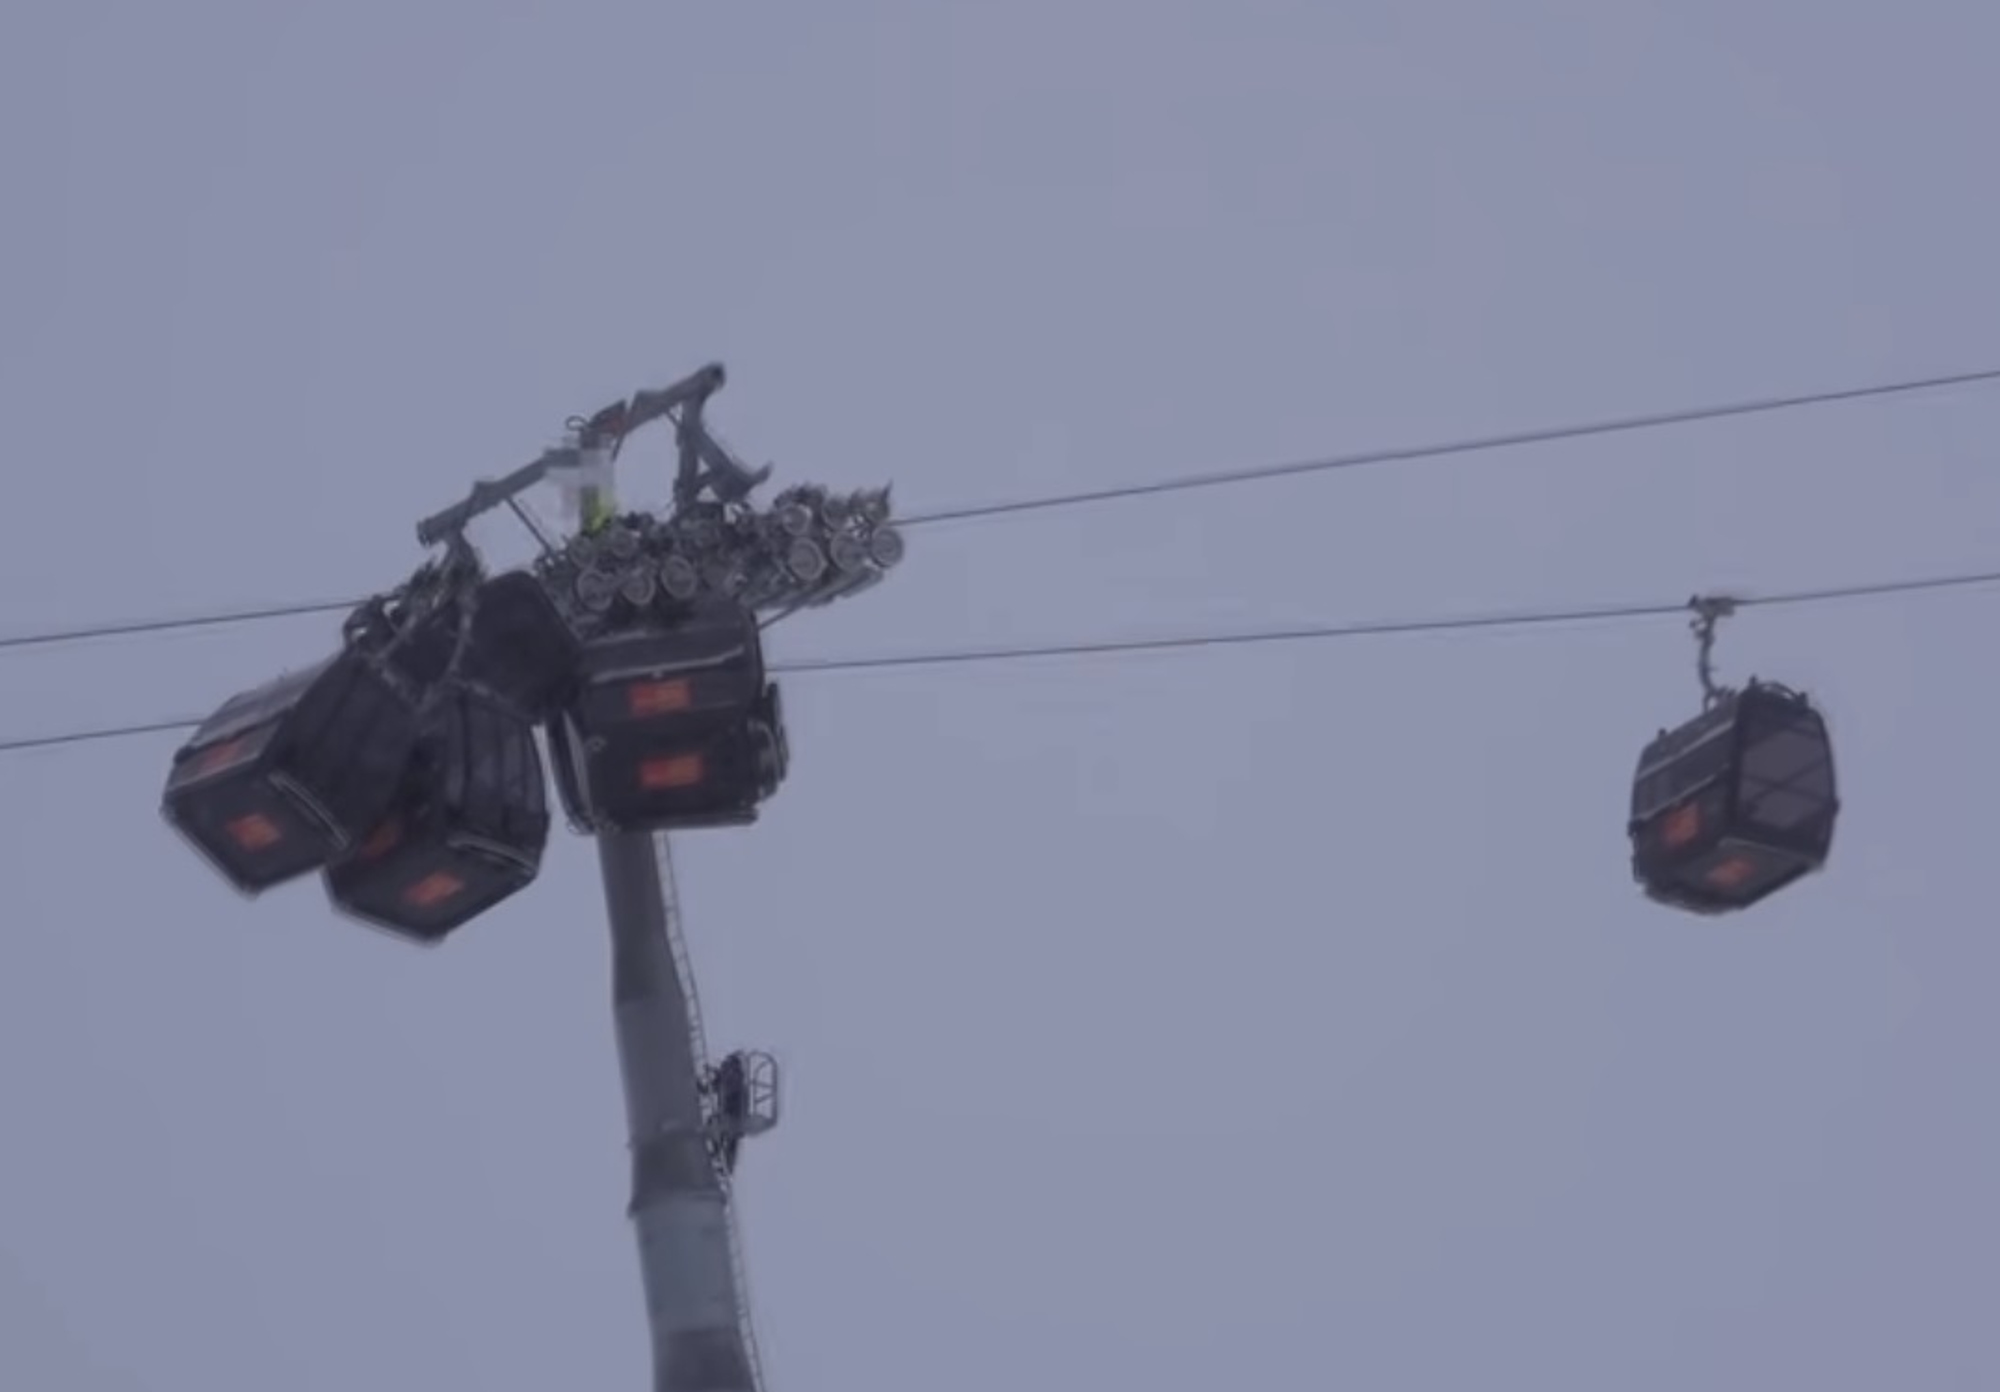 Ski Lift Gondolas In Bizarre Mass Pileup In High Winds - ViralTab